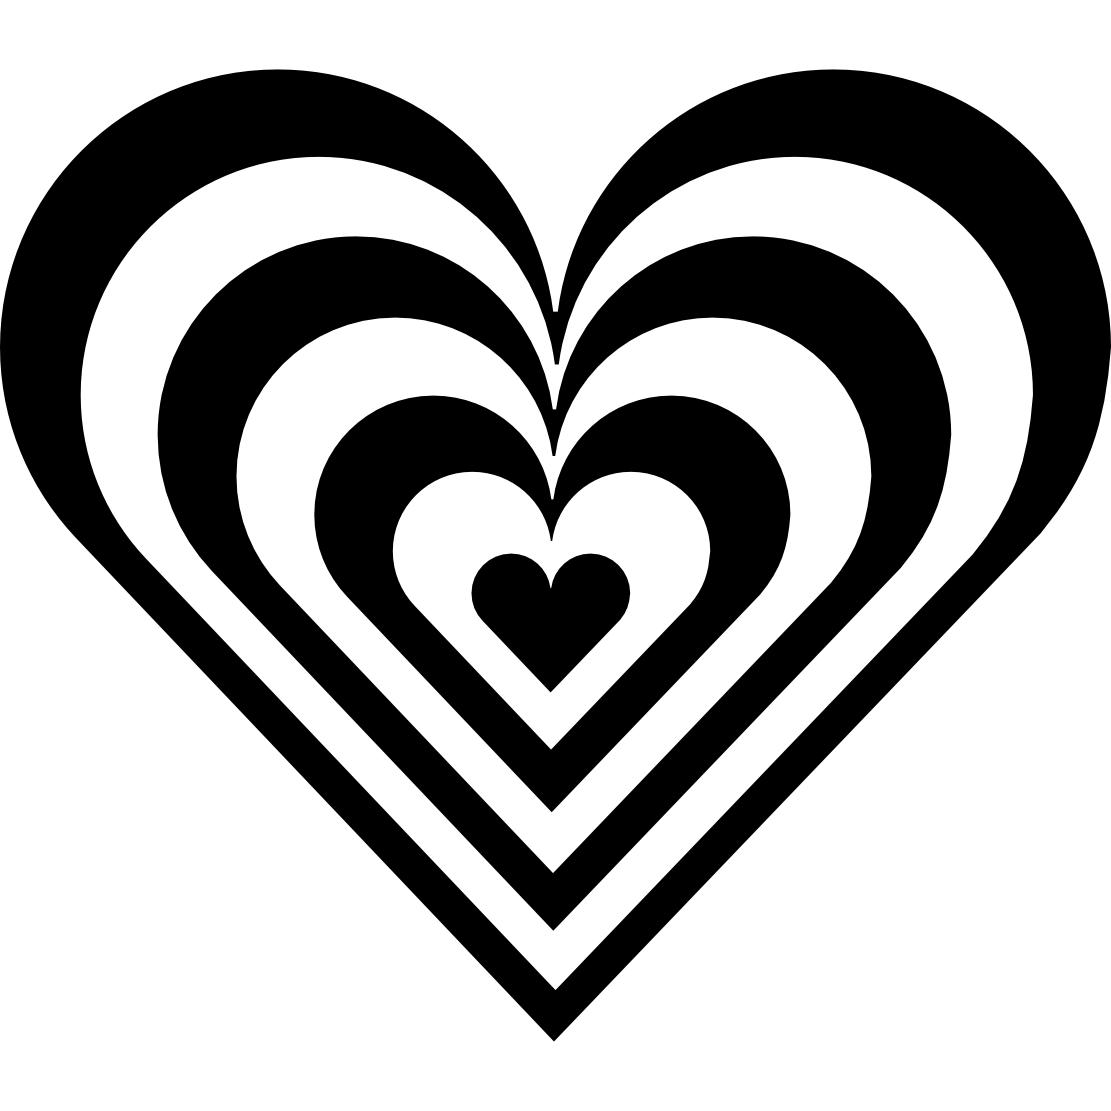 heart border clipart black an - Heart Clip Art Black And White